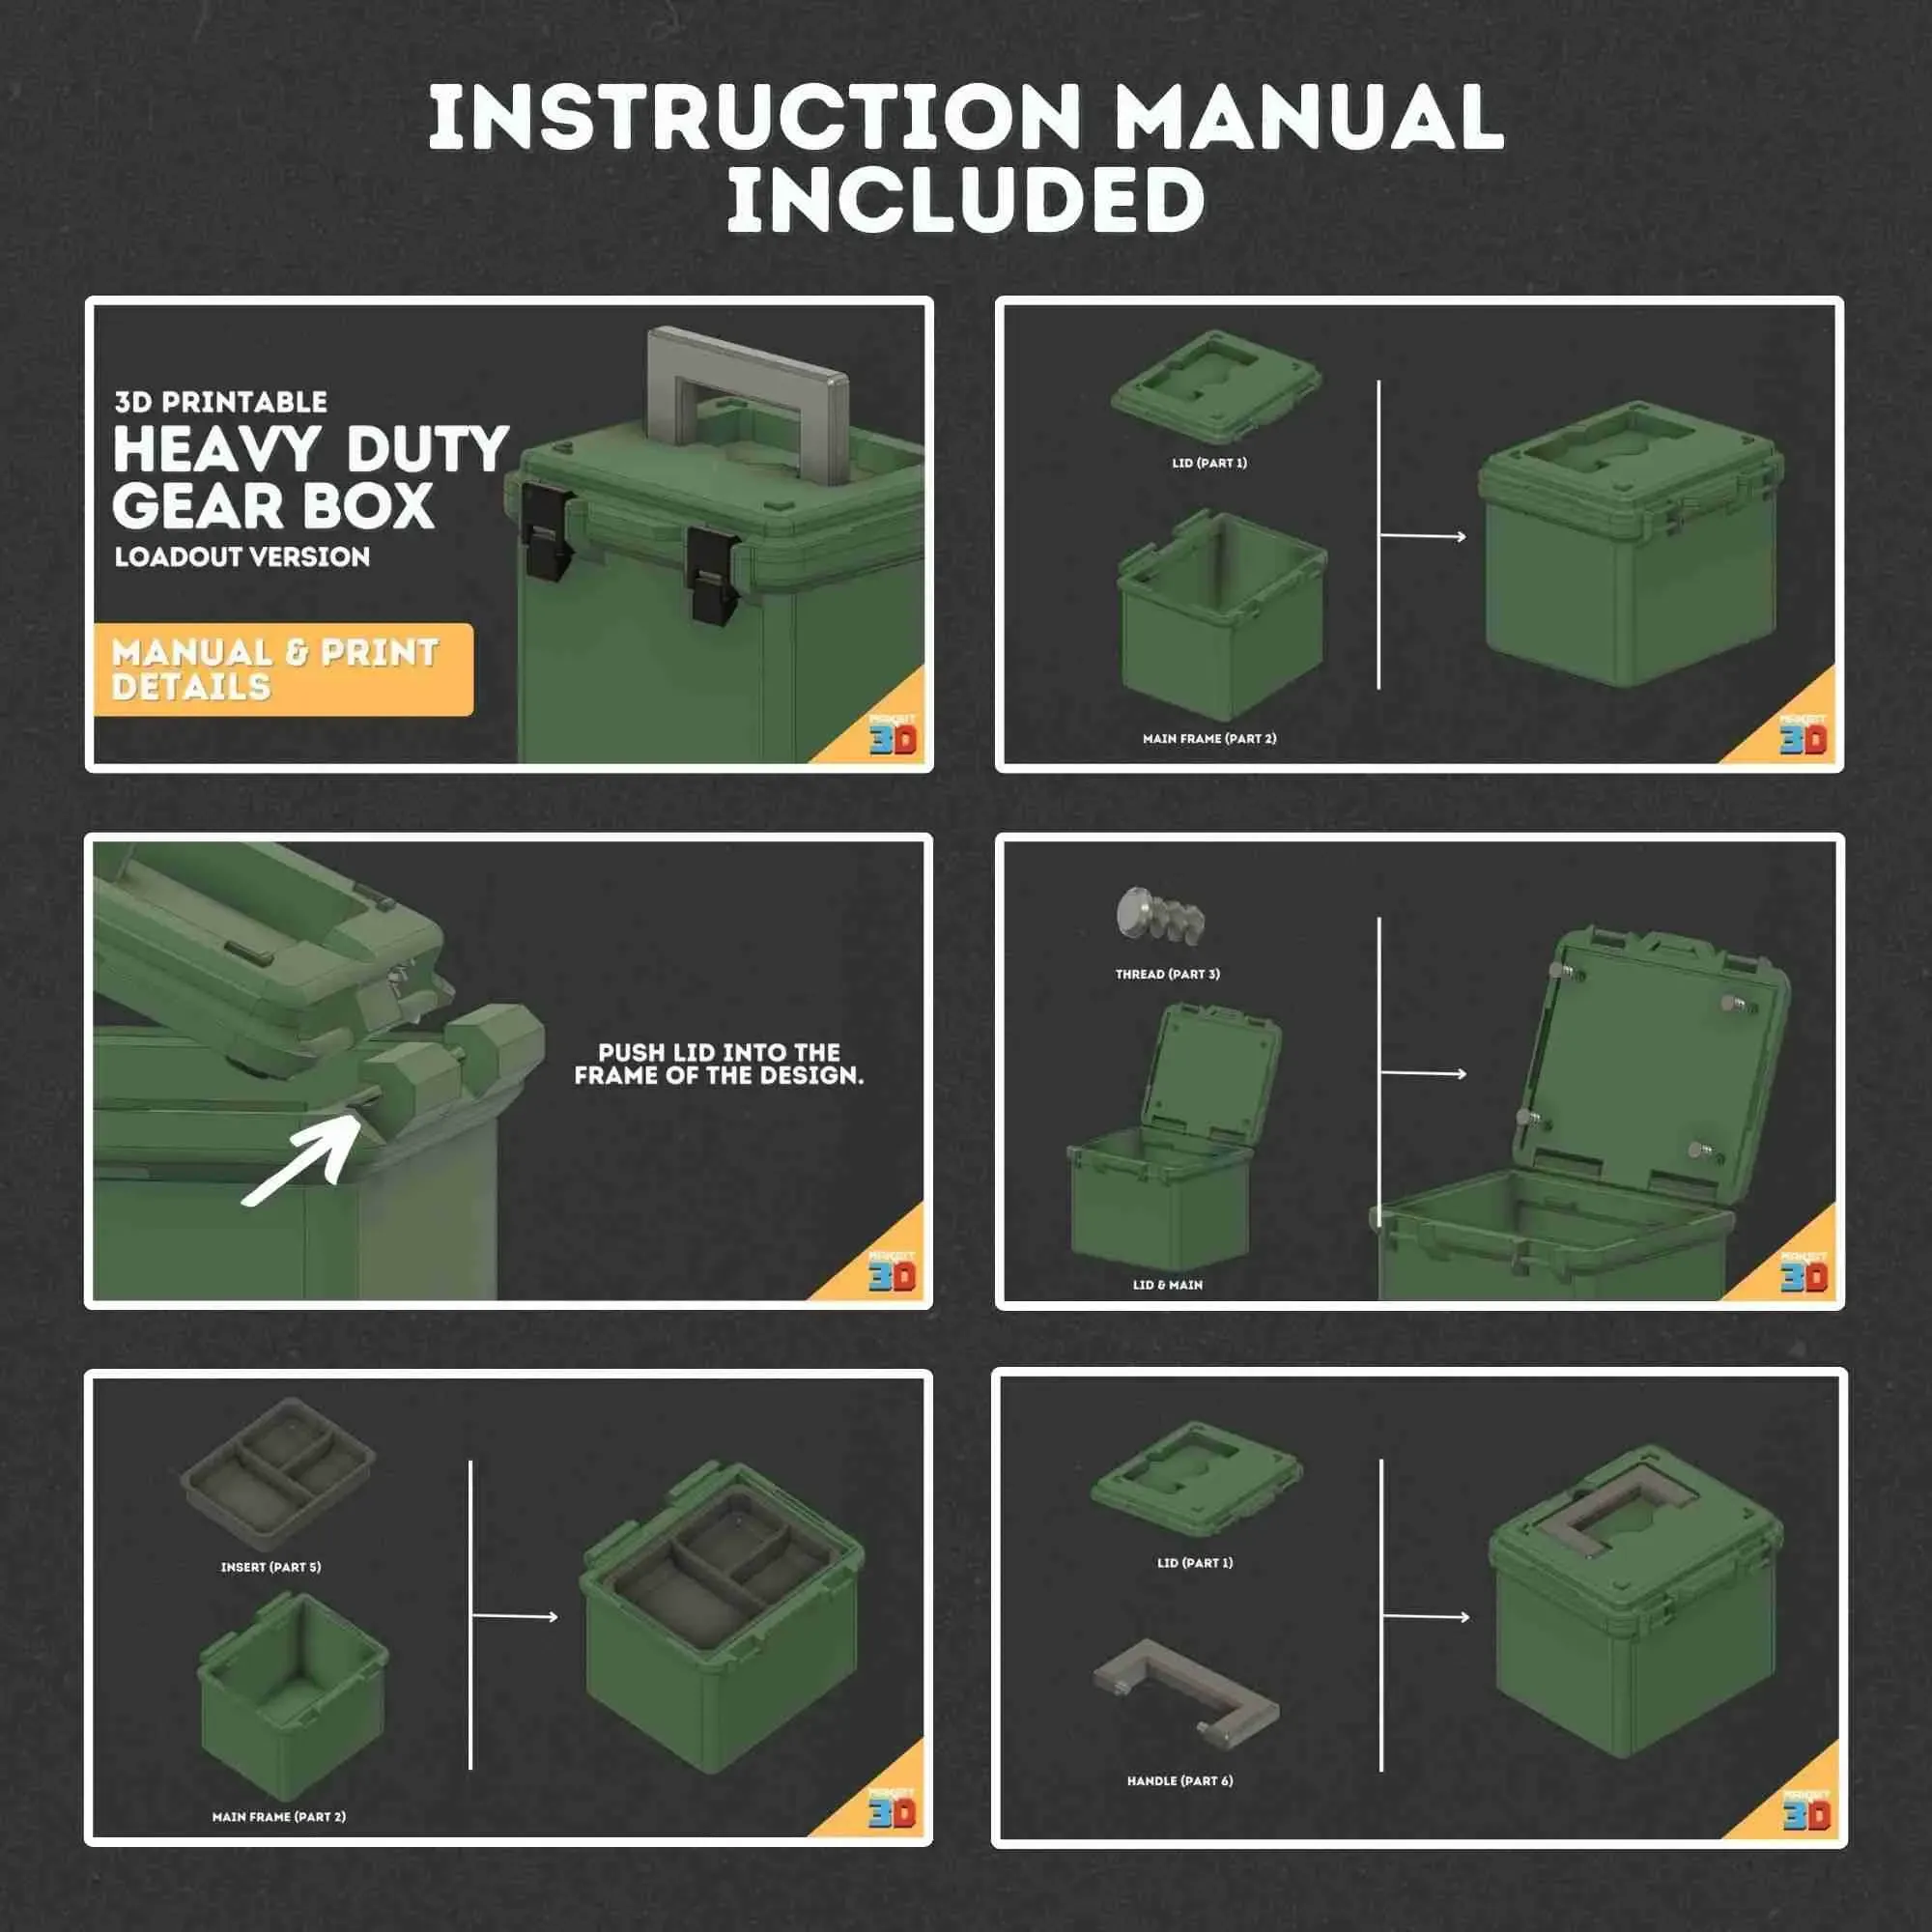 3D Printed Heavy Duty Gear Box Loadout Version STL Files